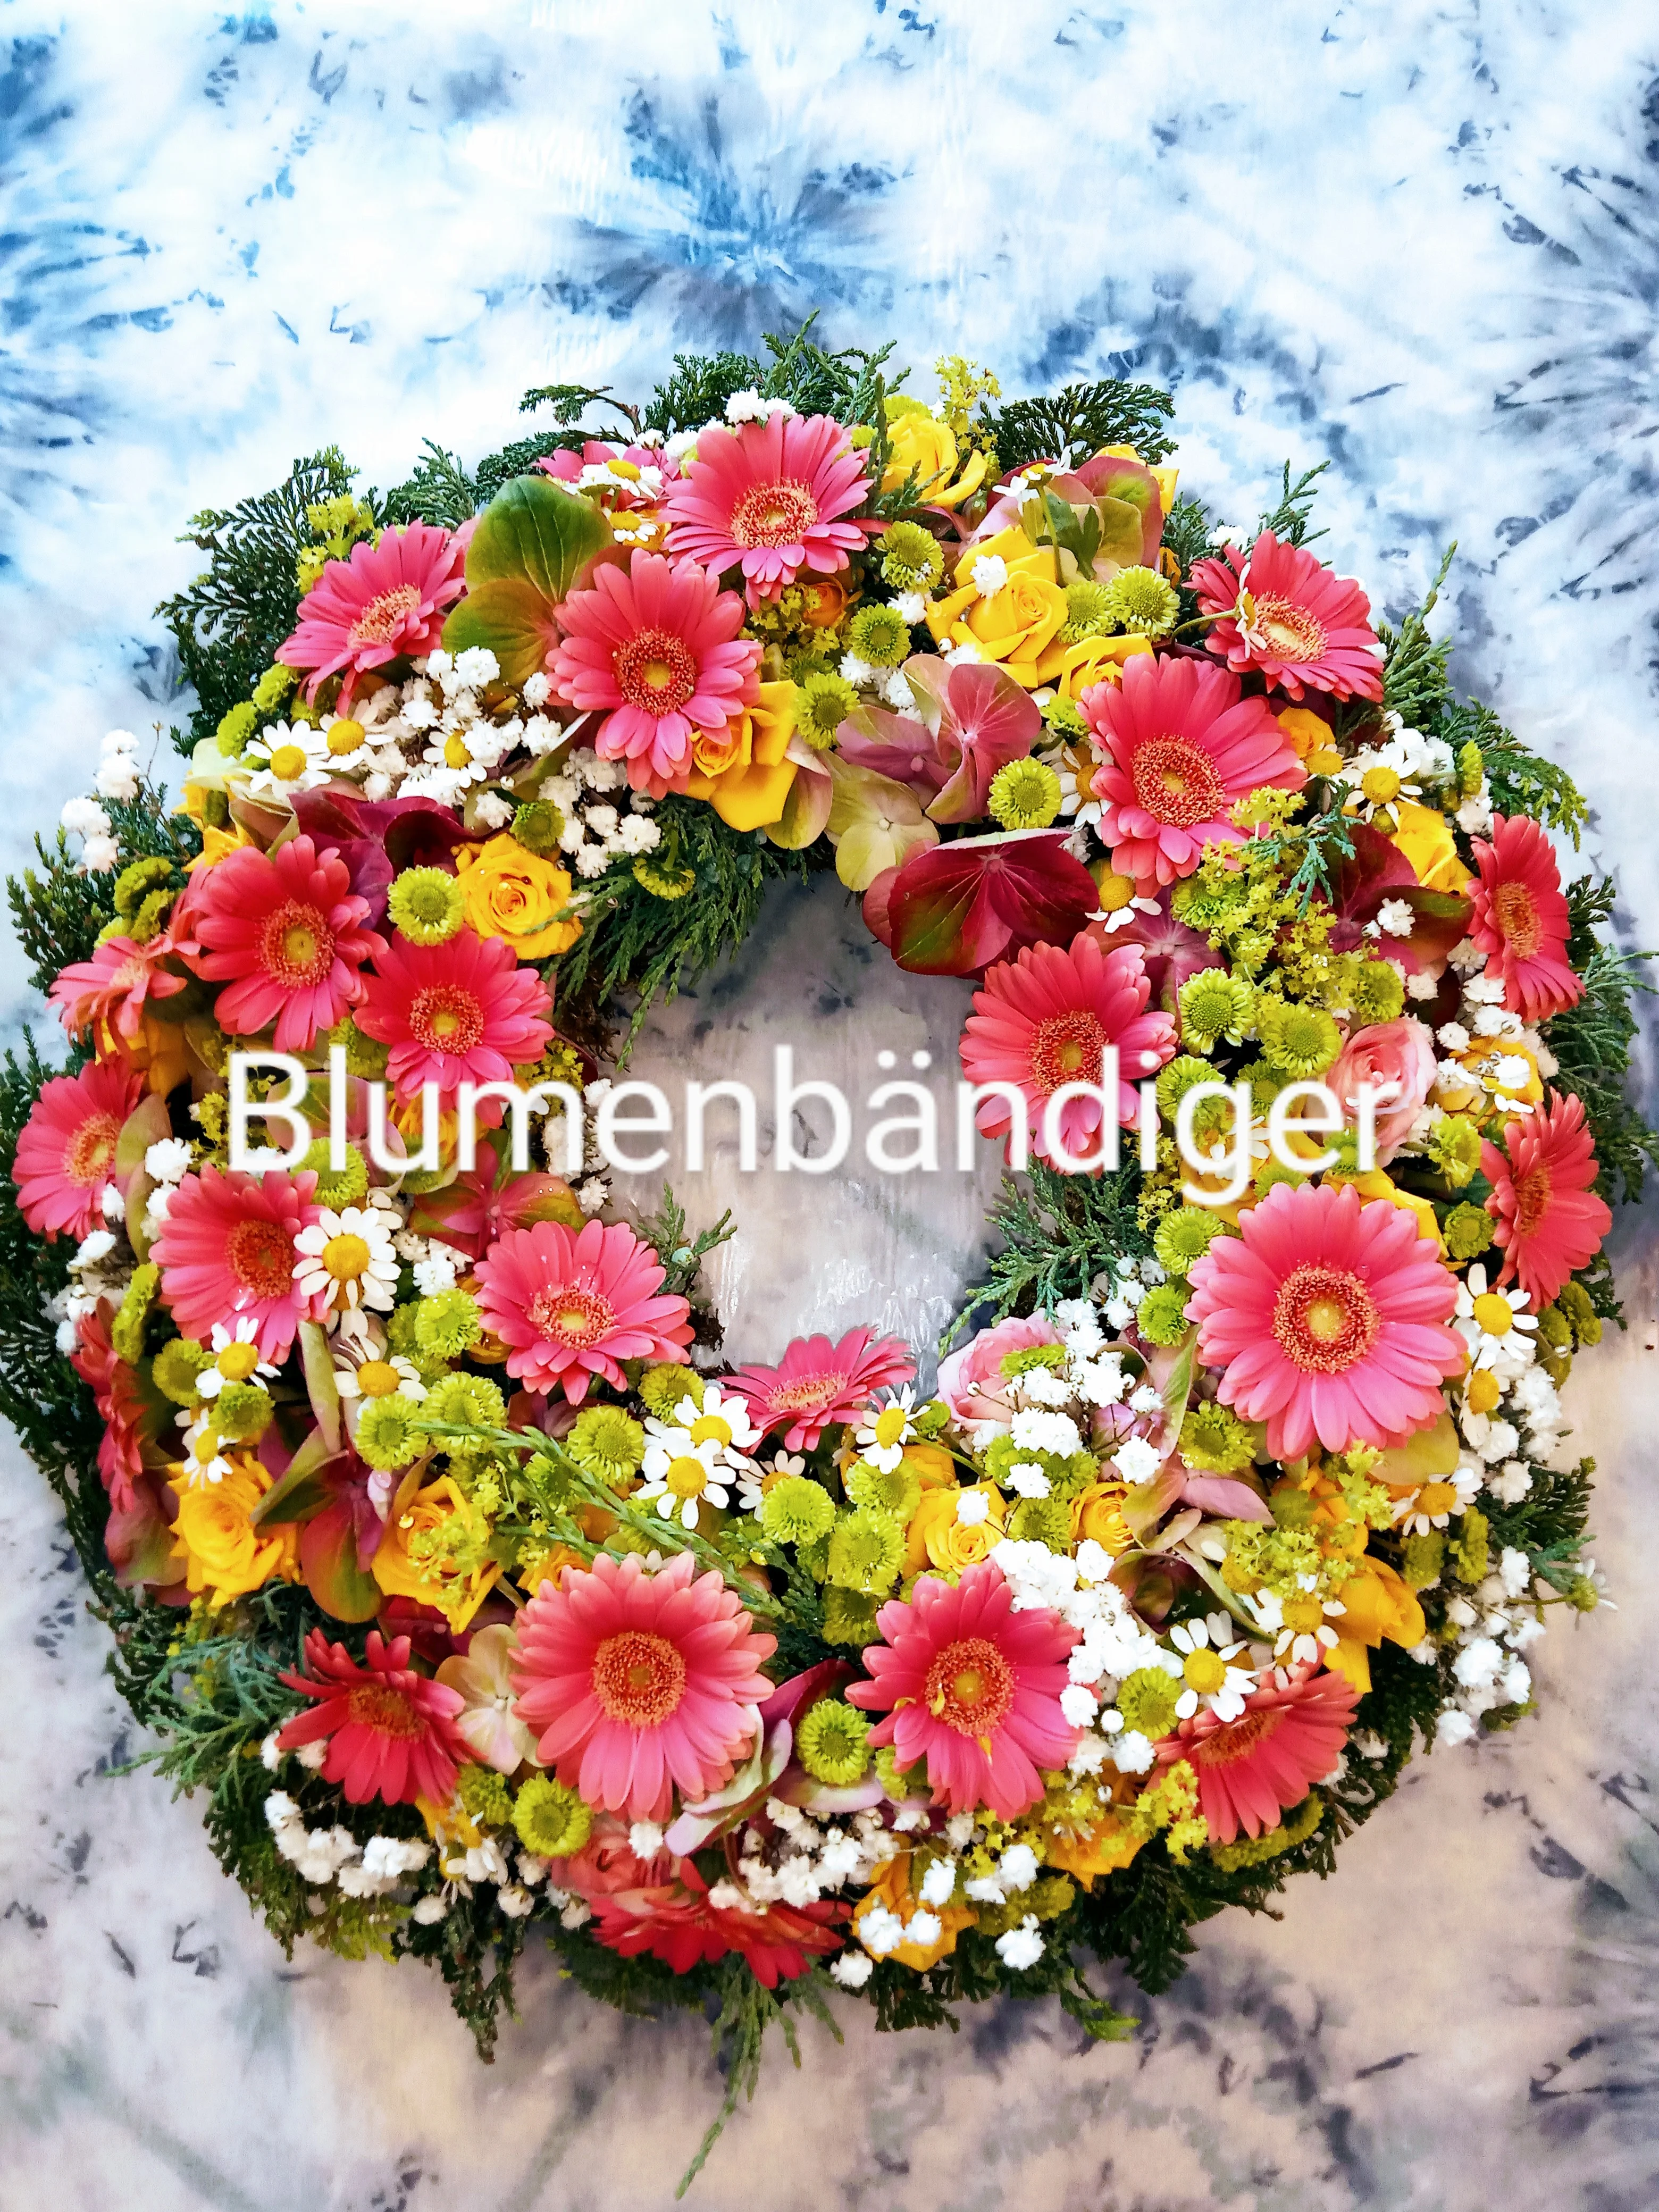 Blumenbändiger Pirna | natürlich blumig | Pirna, Dresden und Umgebung